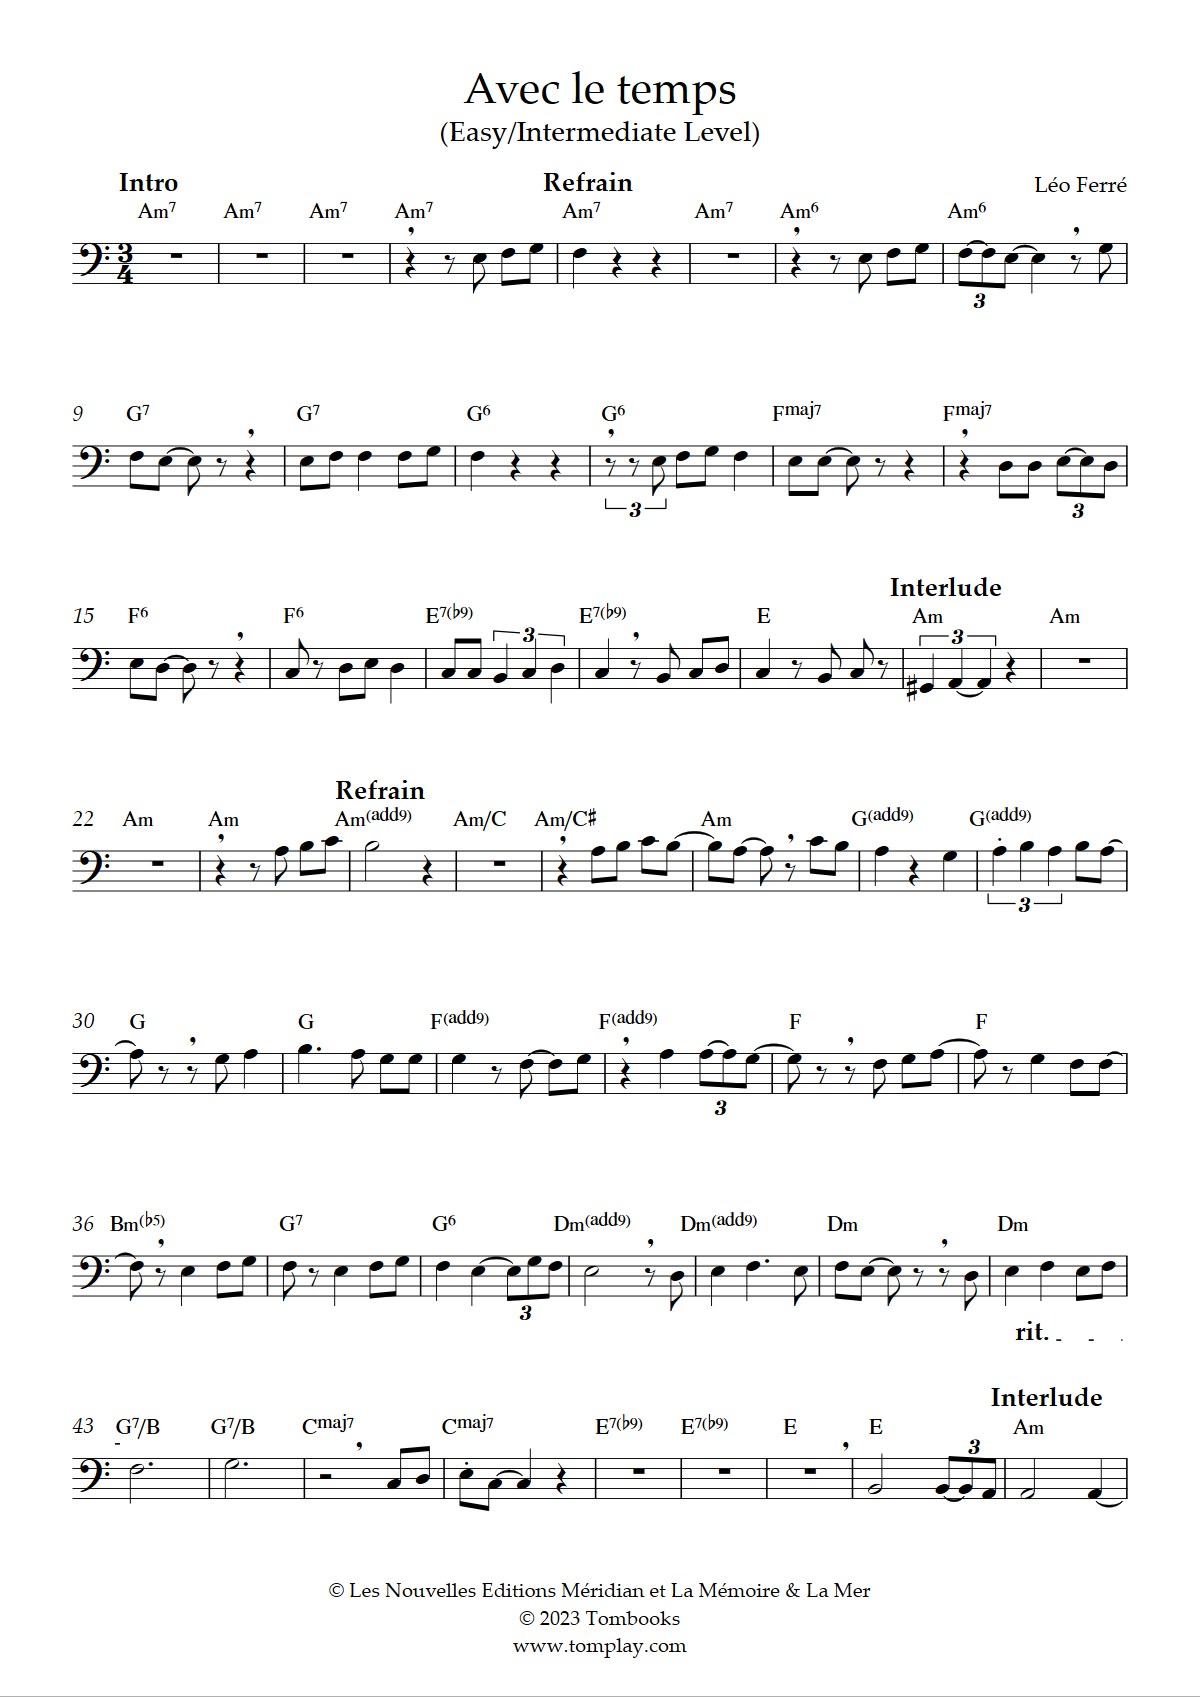 Avec le temps (Easy/Intermediate Level) (Léo Ferré) - Trombone Sheet Music